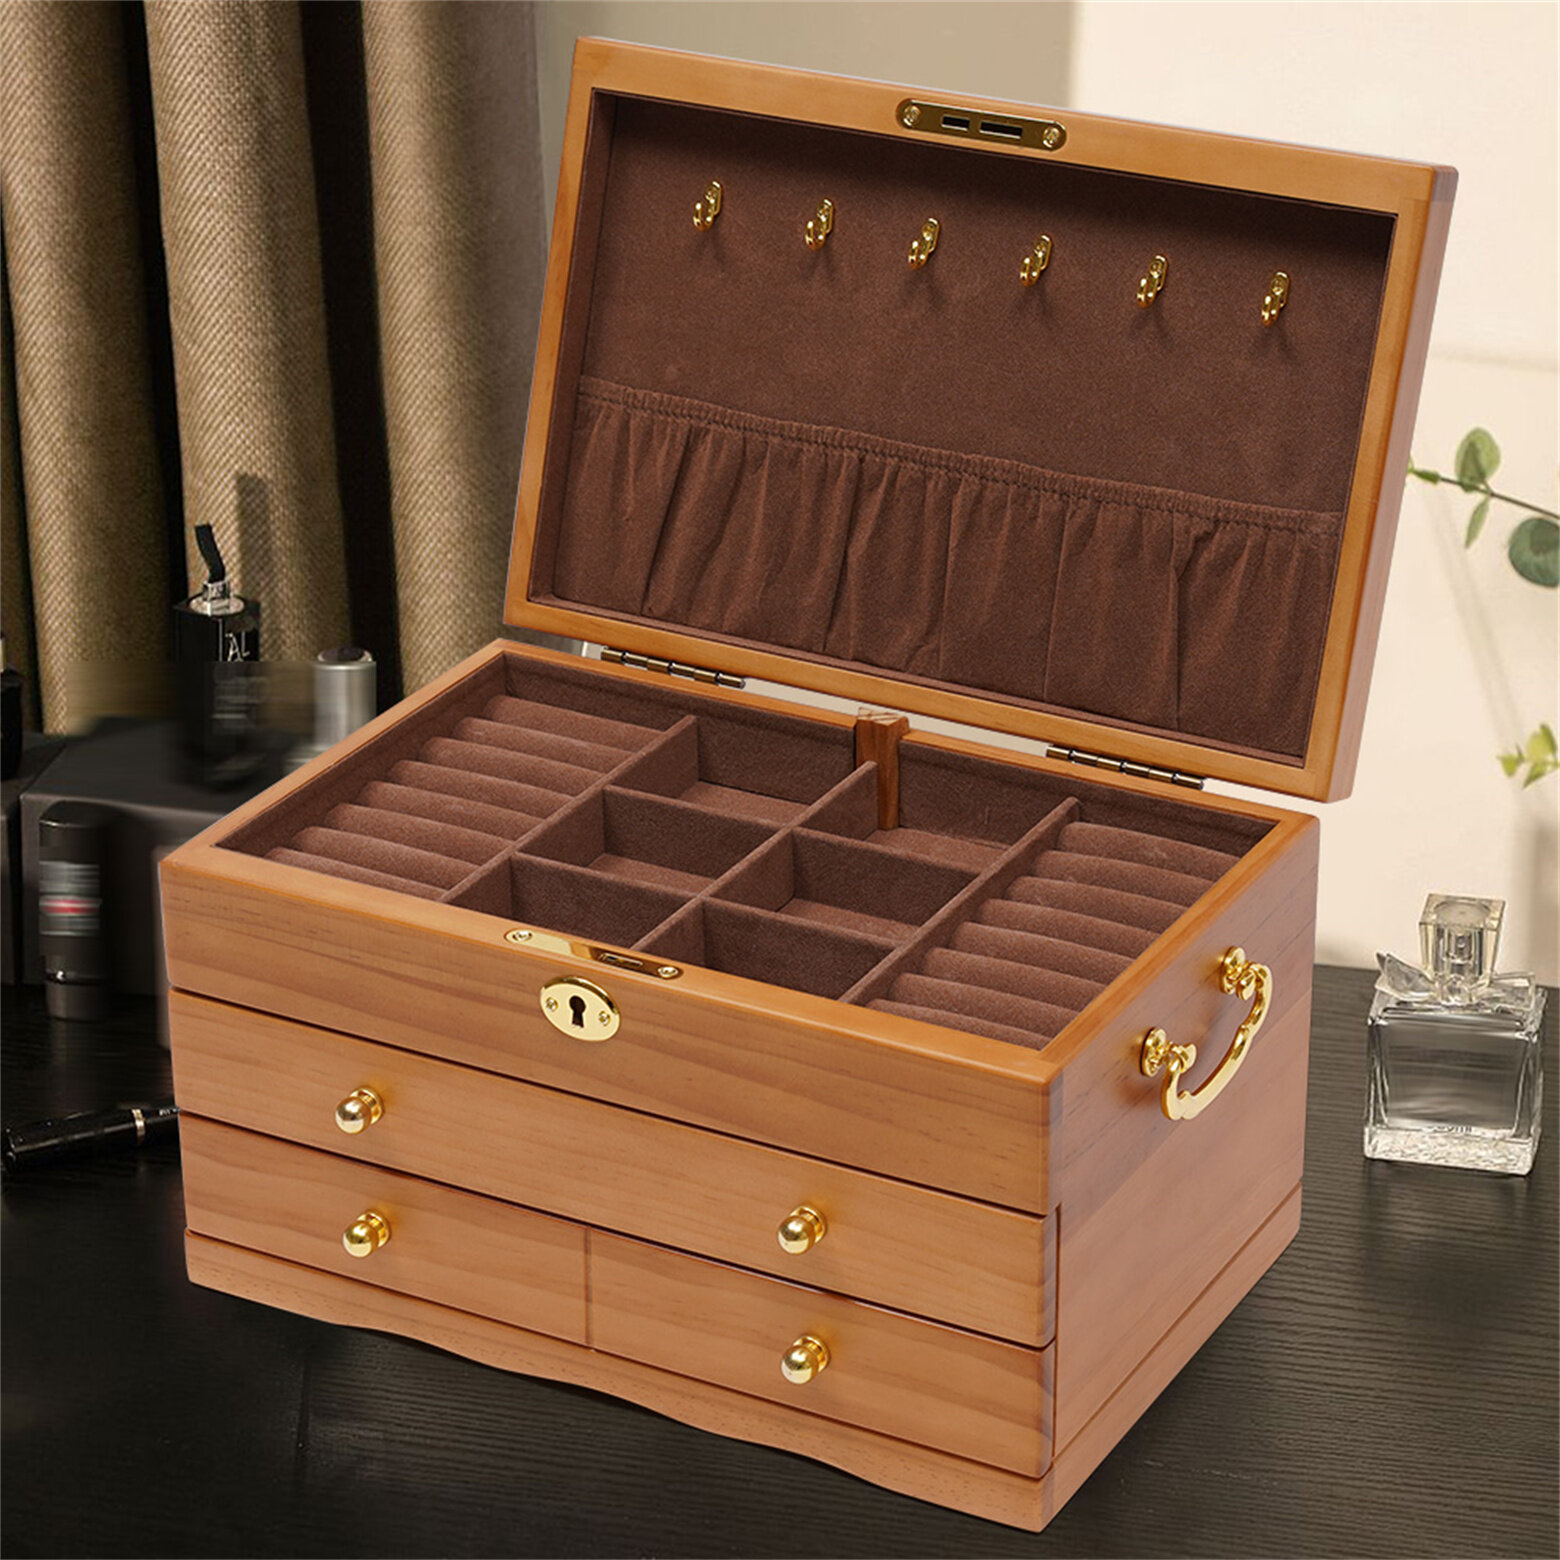 Handmade Wooden Jewelry Box With Drawers, Large Jewelry Box, Jewelry Holder,  Decorative Storage Box, Rustic Jewelry Organizer for Women 